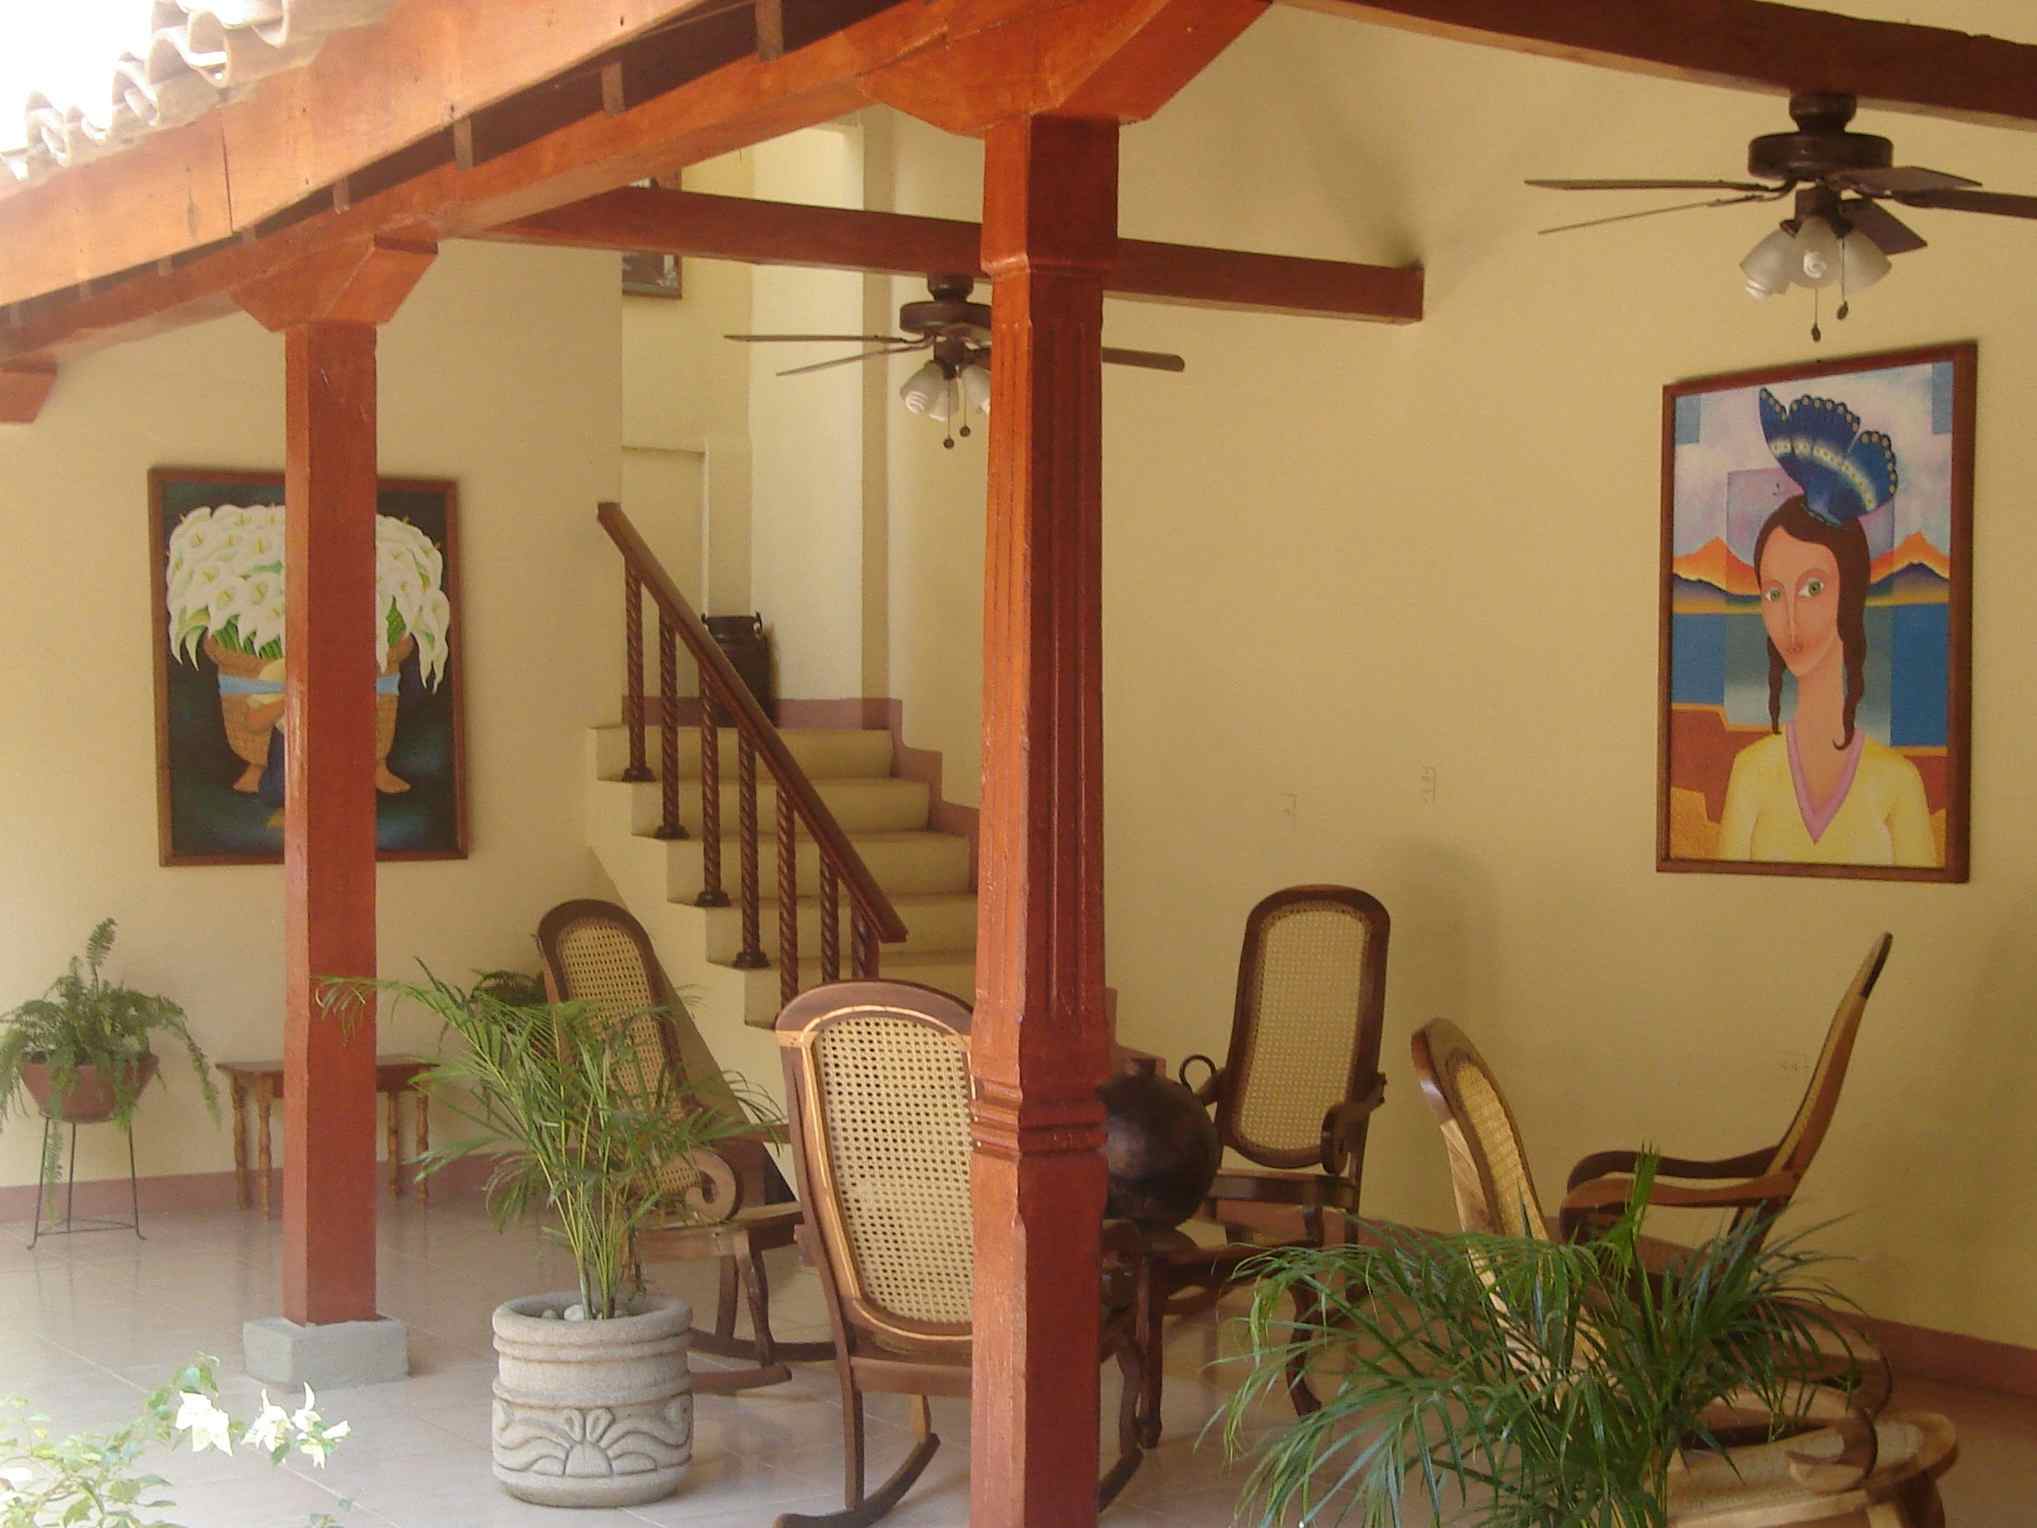 Hotel Real, León, Nicaragua